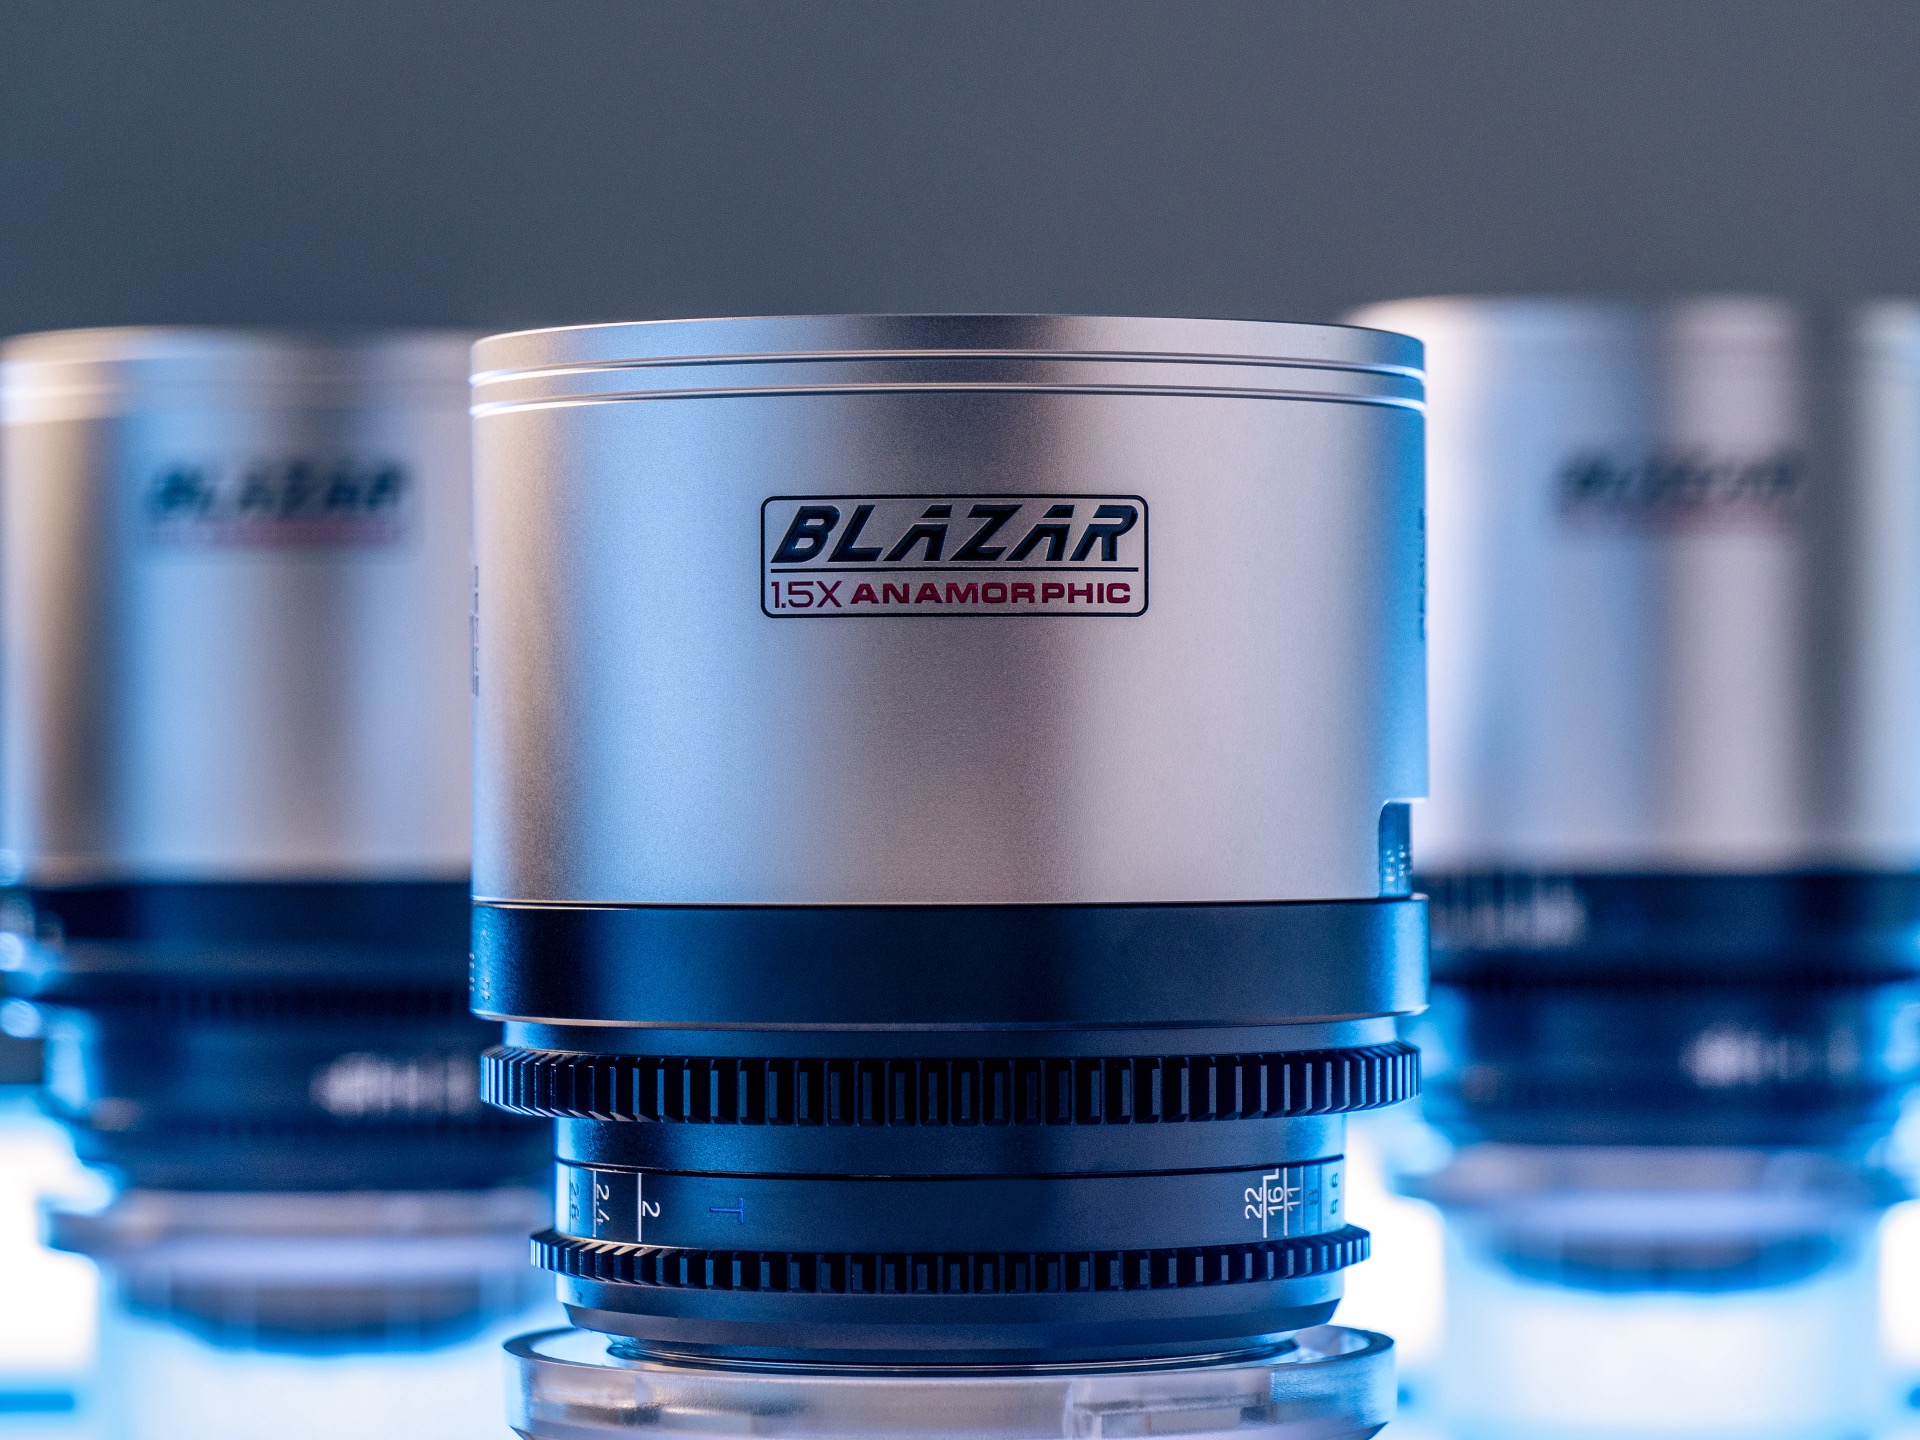 Review: Blazar Remus 1.5x anamorphic lenses 19